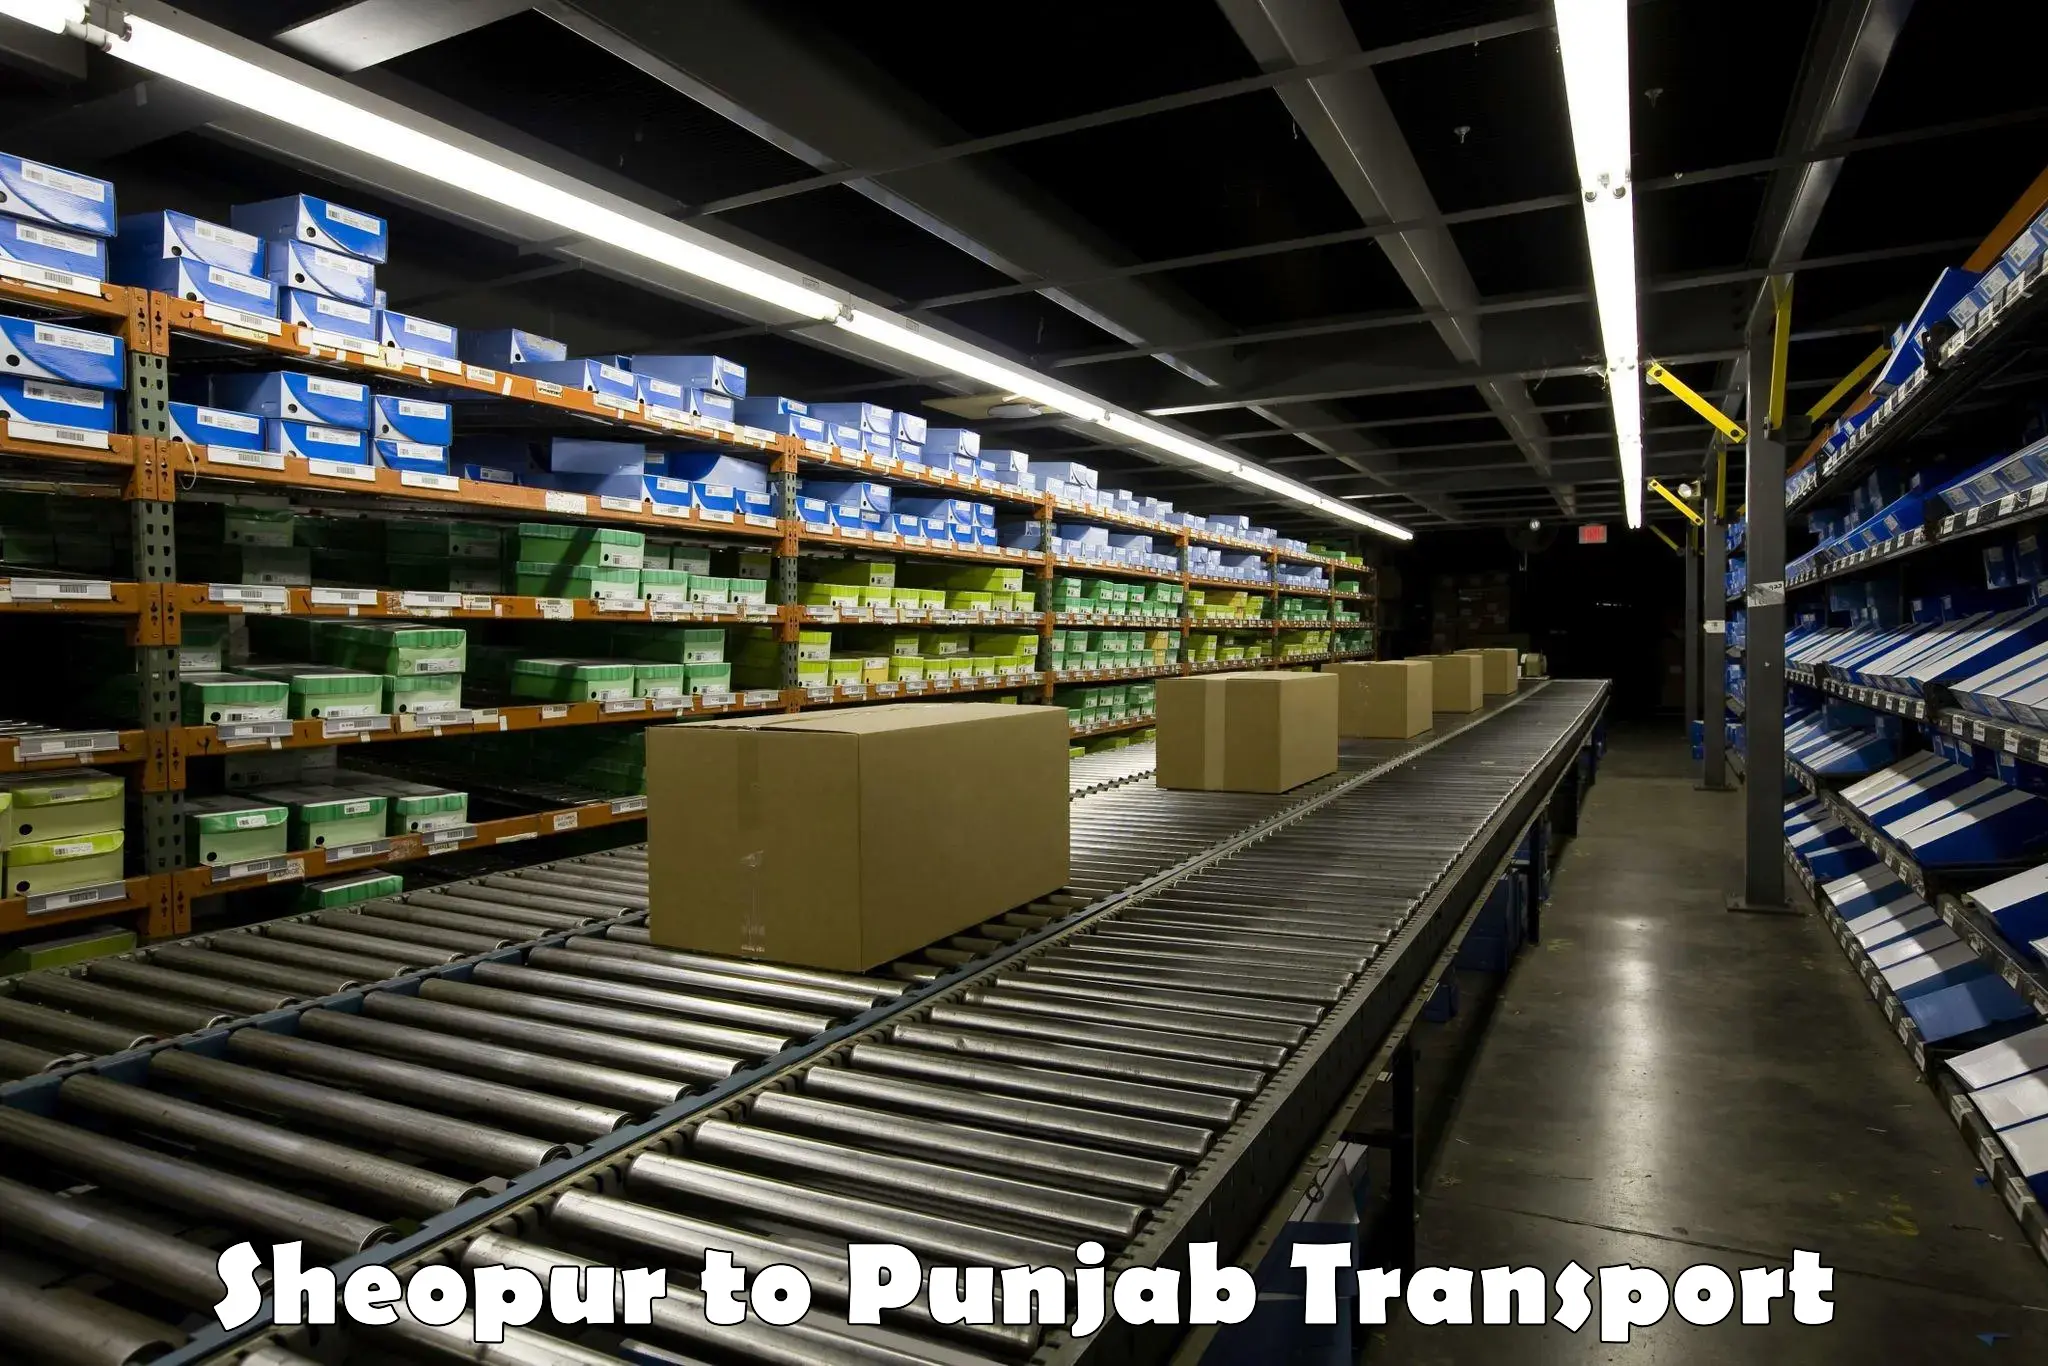 Commercial transport service Sheopur to Punjab